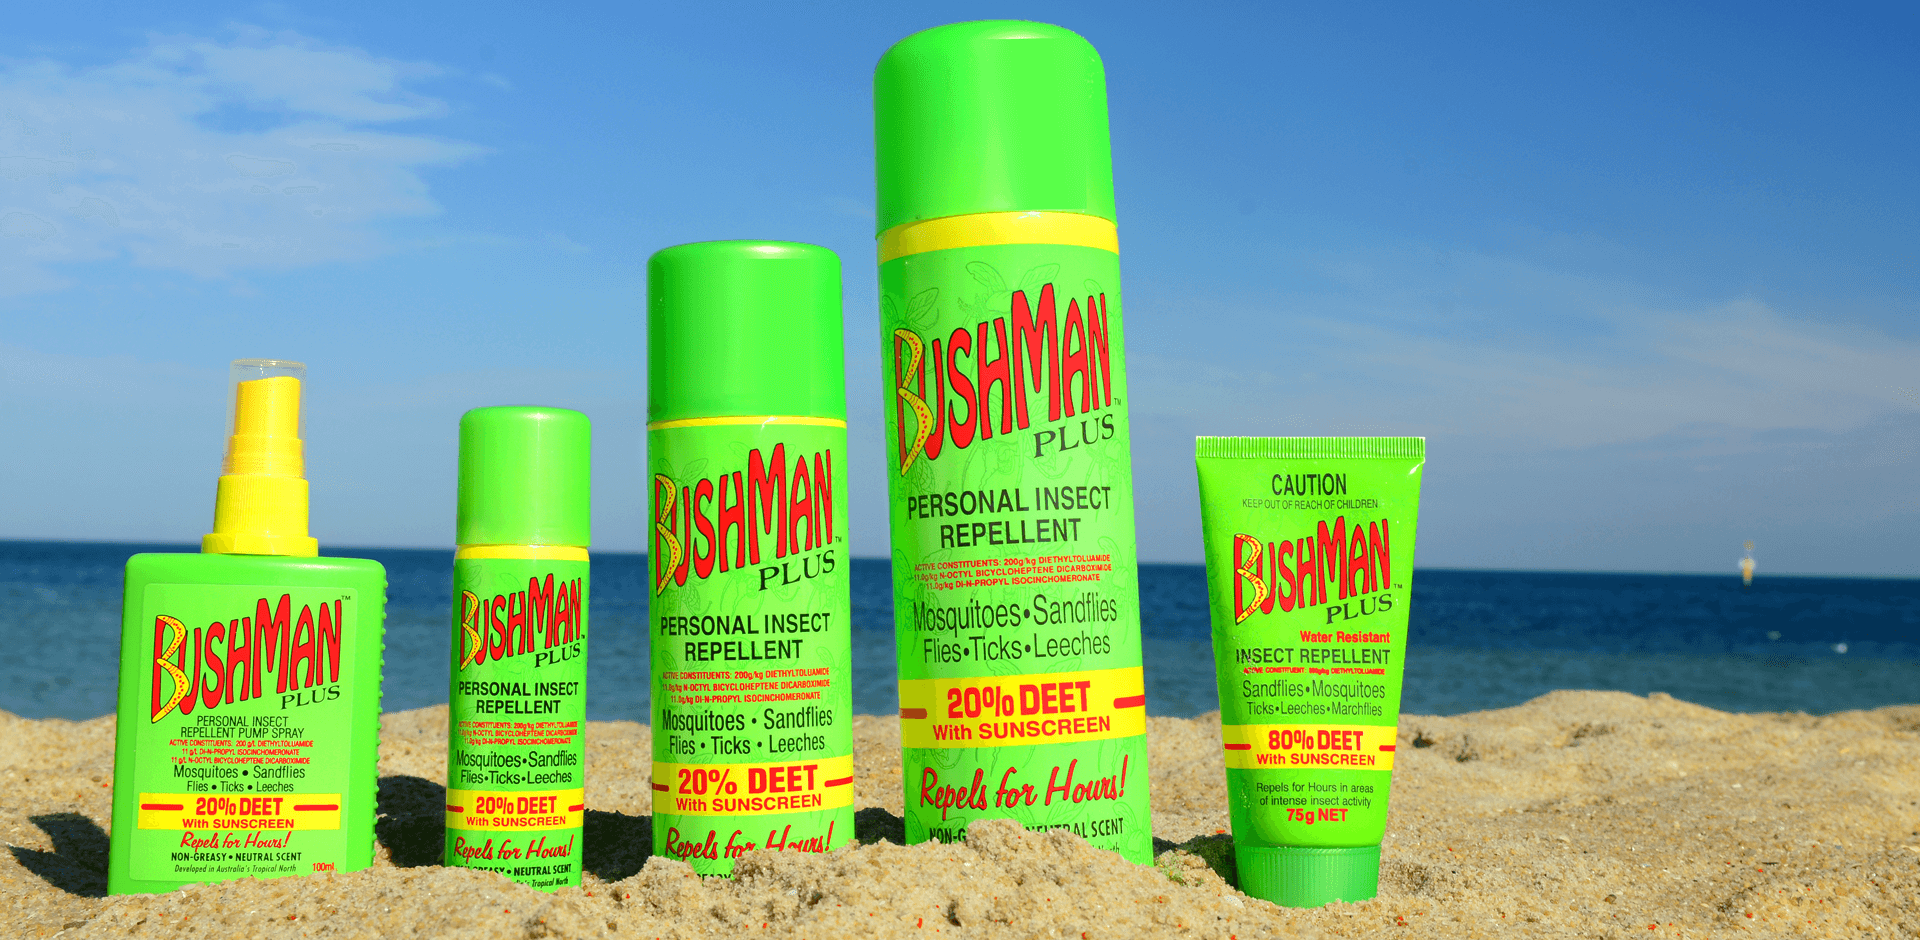 Bushman products